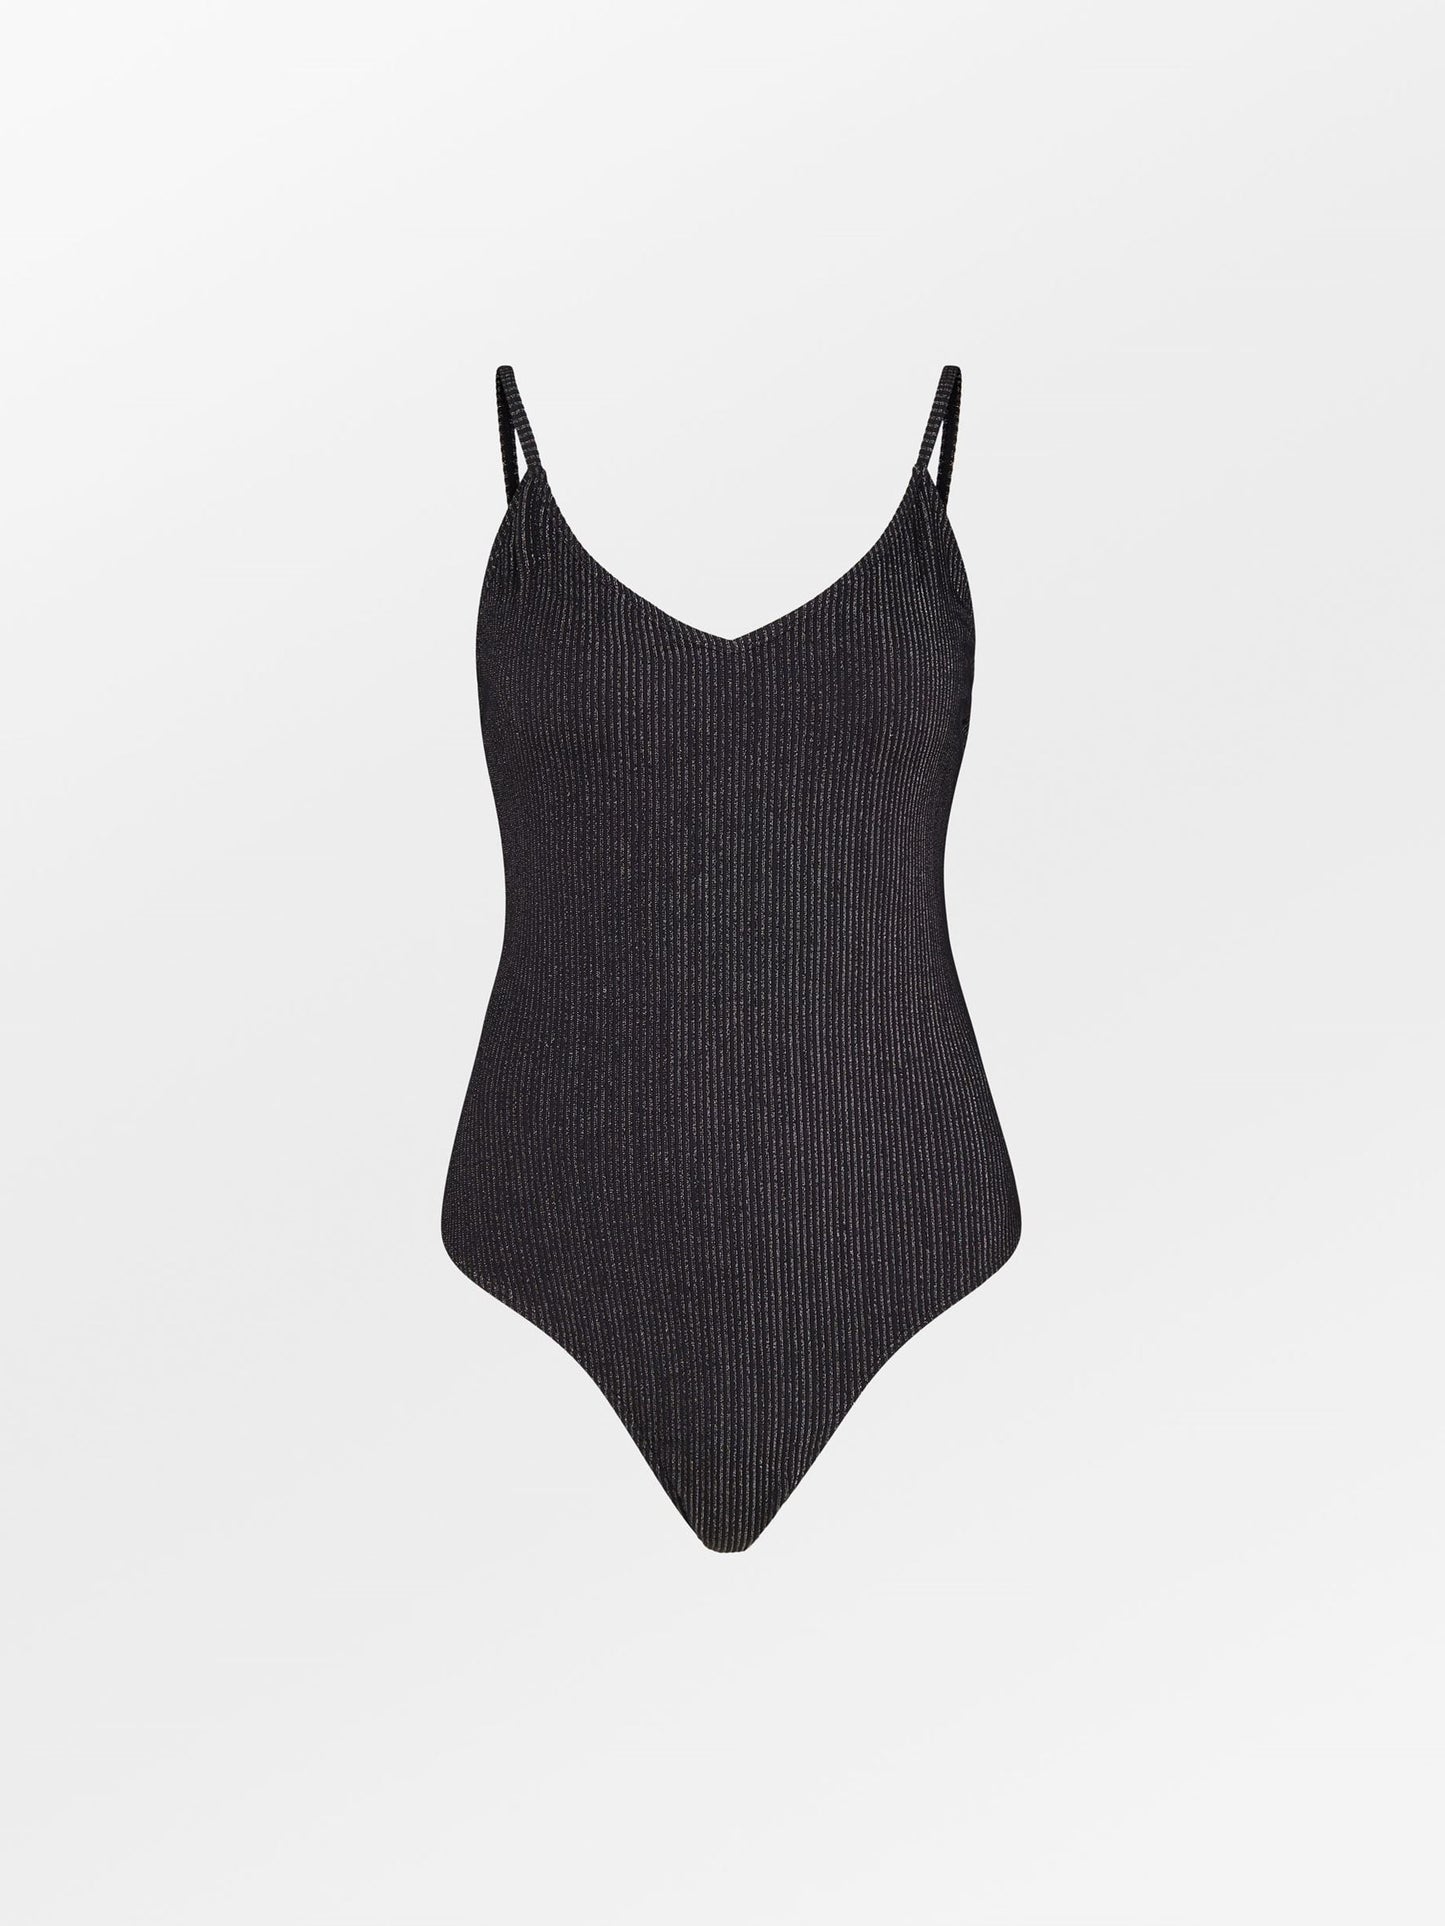 Becksöndergaard, Lyx Bea Swimsuit - Black, archive, archive, swimwear, sale, sale, swimwear